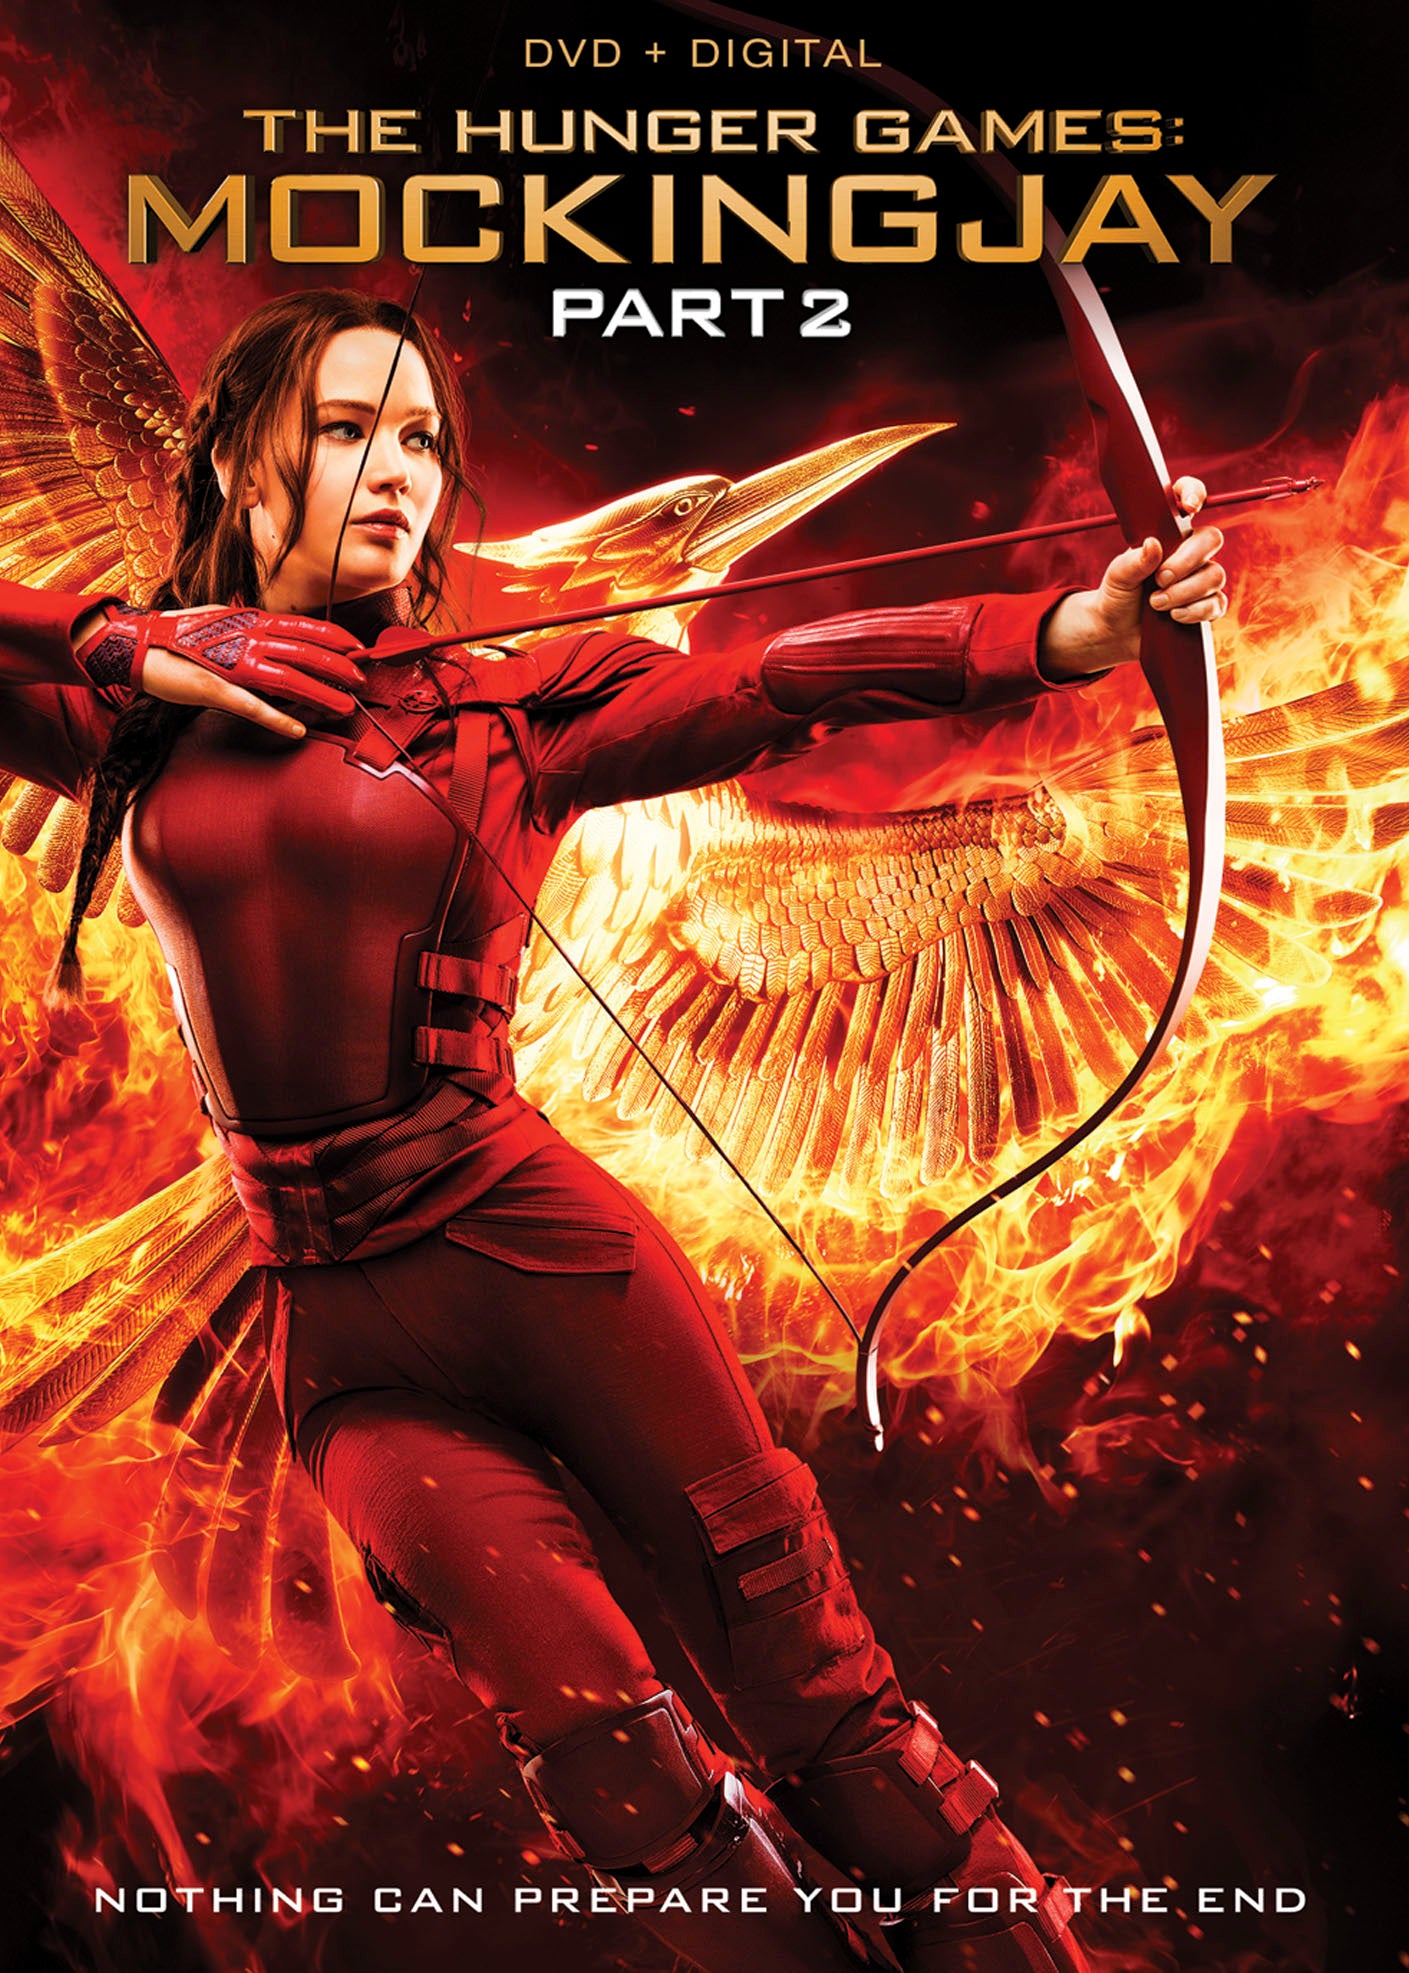 Hunger Games: Mockingjay, Part 2 cover art